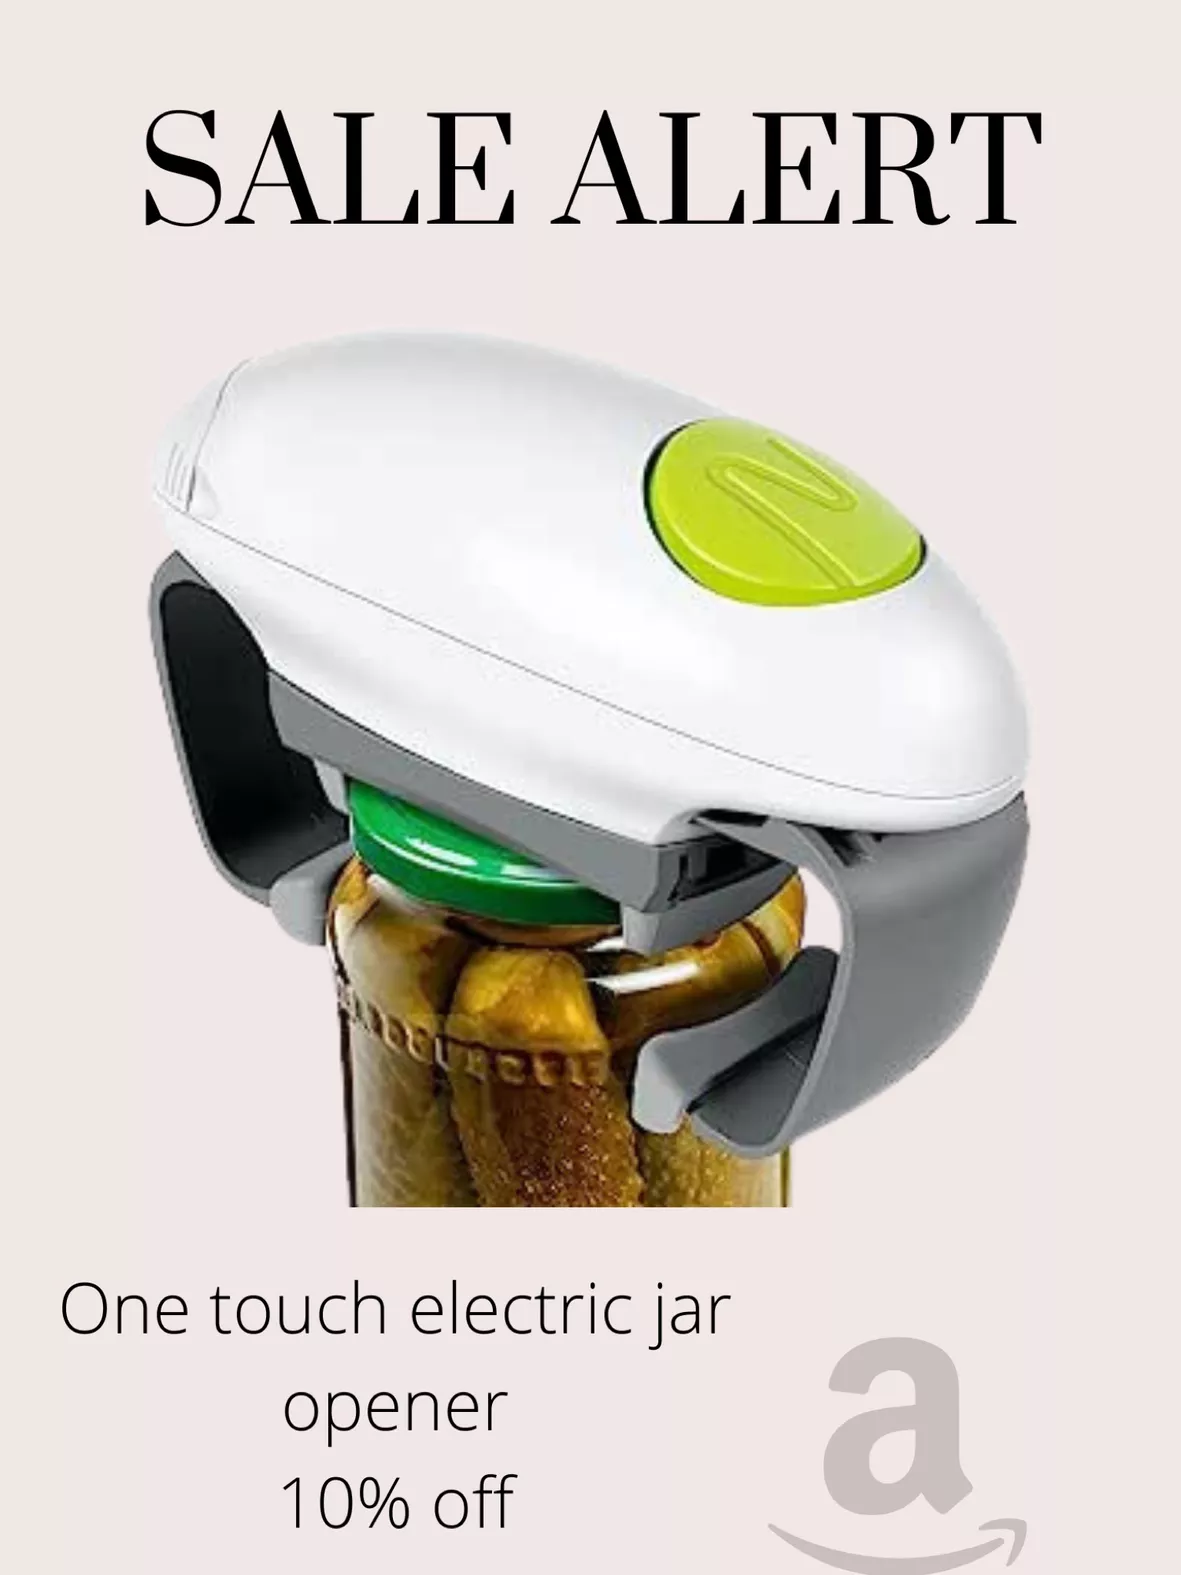 Robotwist (award winning One-Touch Jar Opener) 